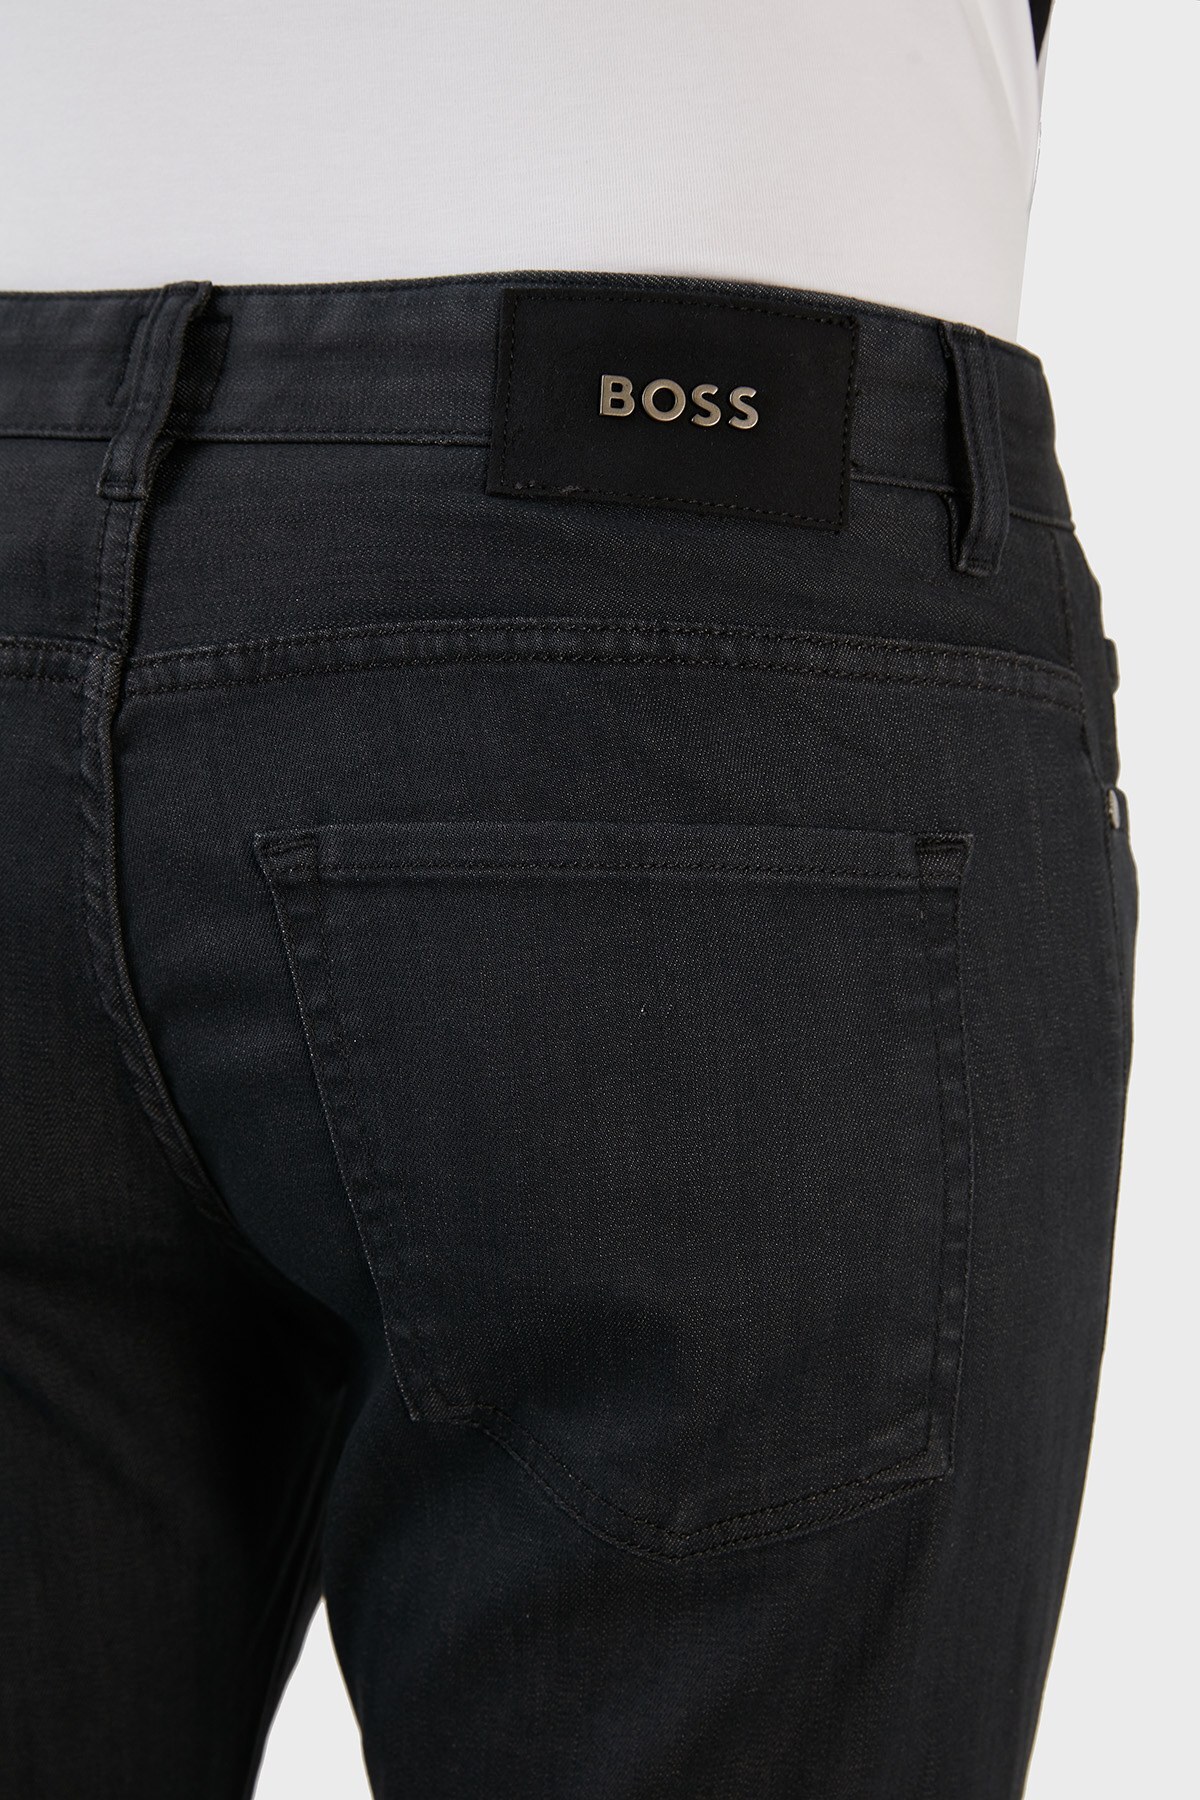 Boss Pamuklu Normal Bel Extra Slim Fit Jeans Erkek Kot Pantolon 50473019 020 ANTRASİT